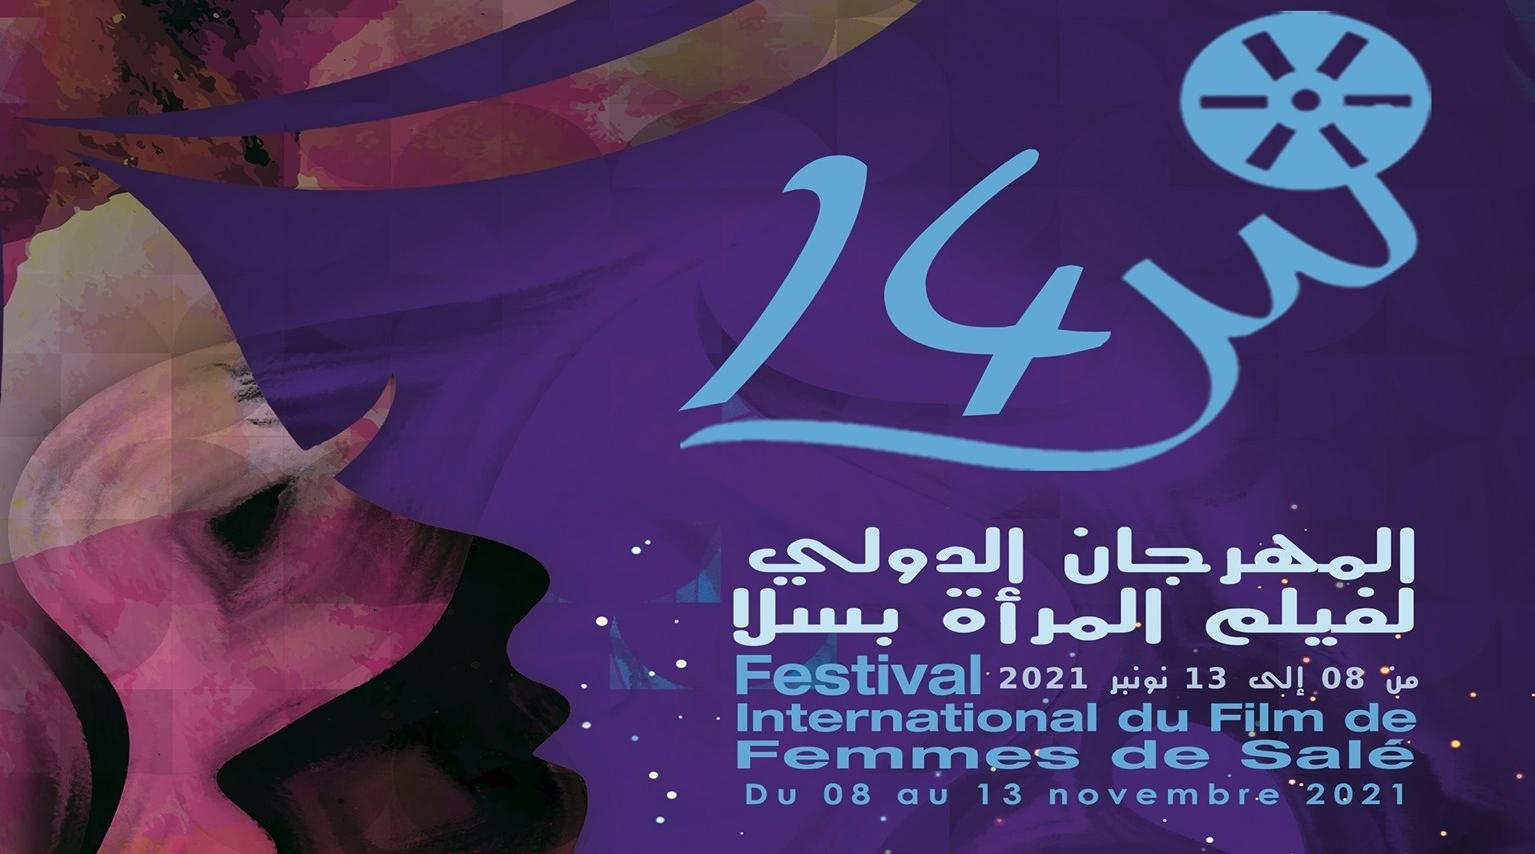 Festival international du film de femmes de Salé, du 8 au 13 novembre 2021